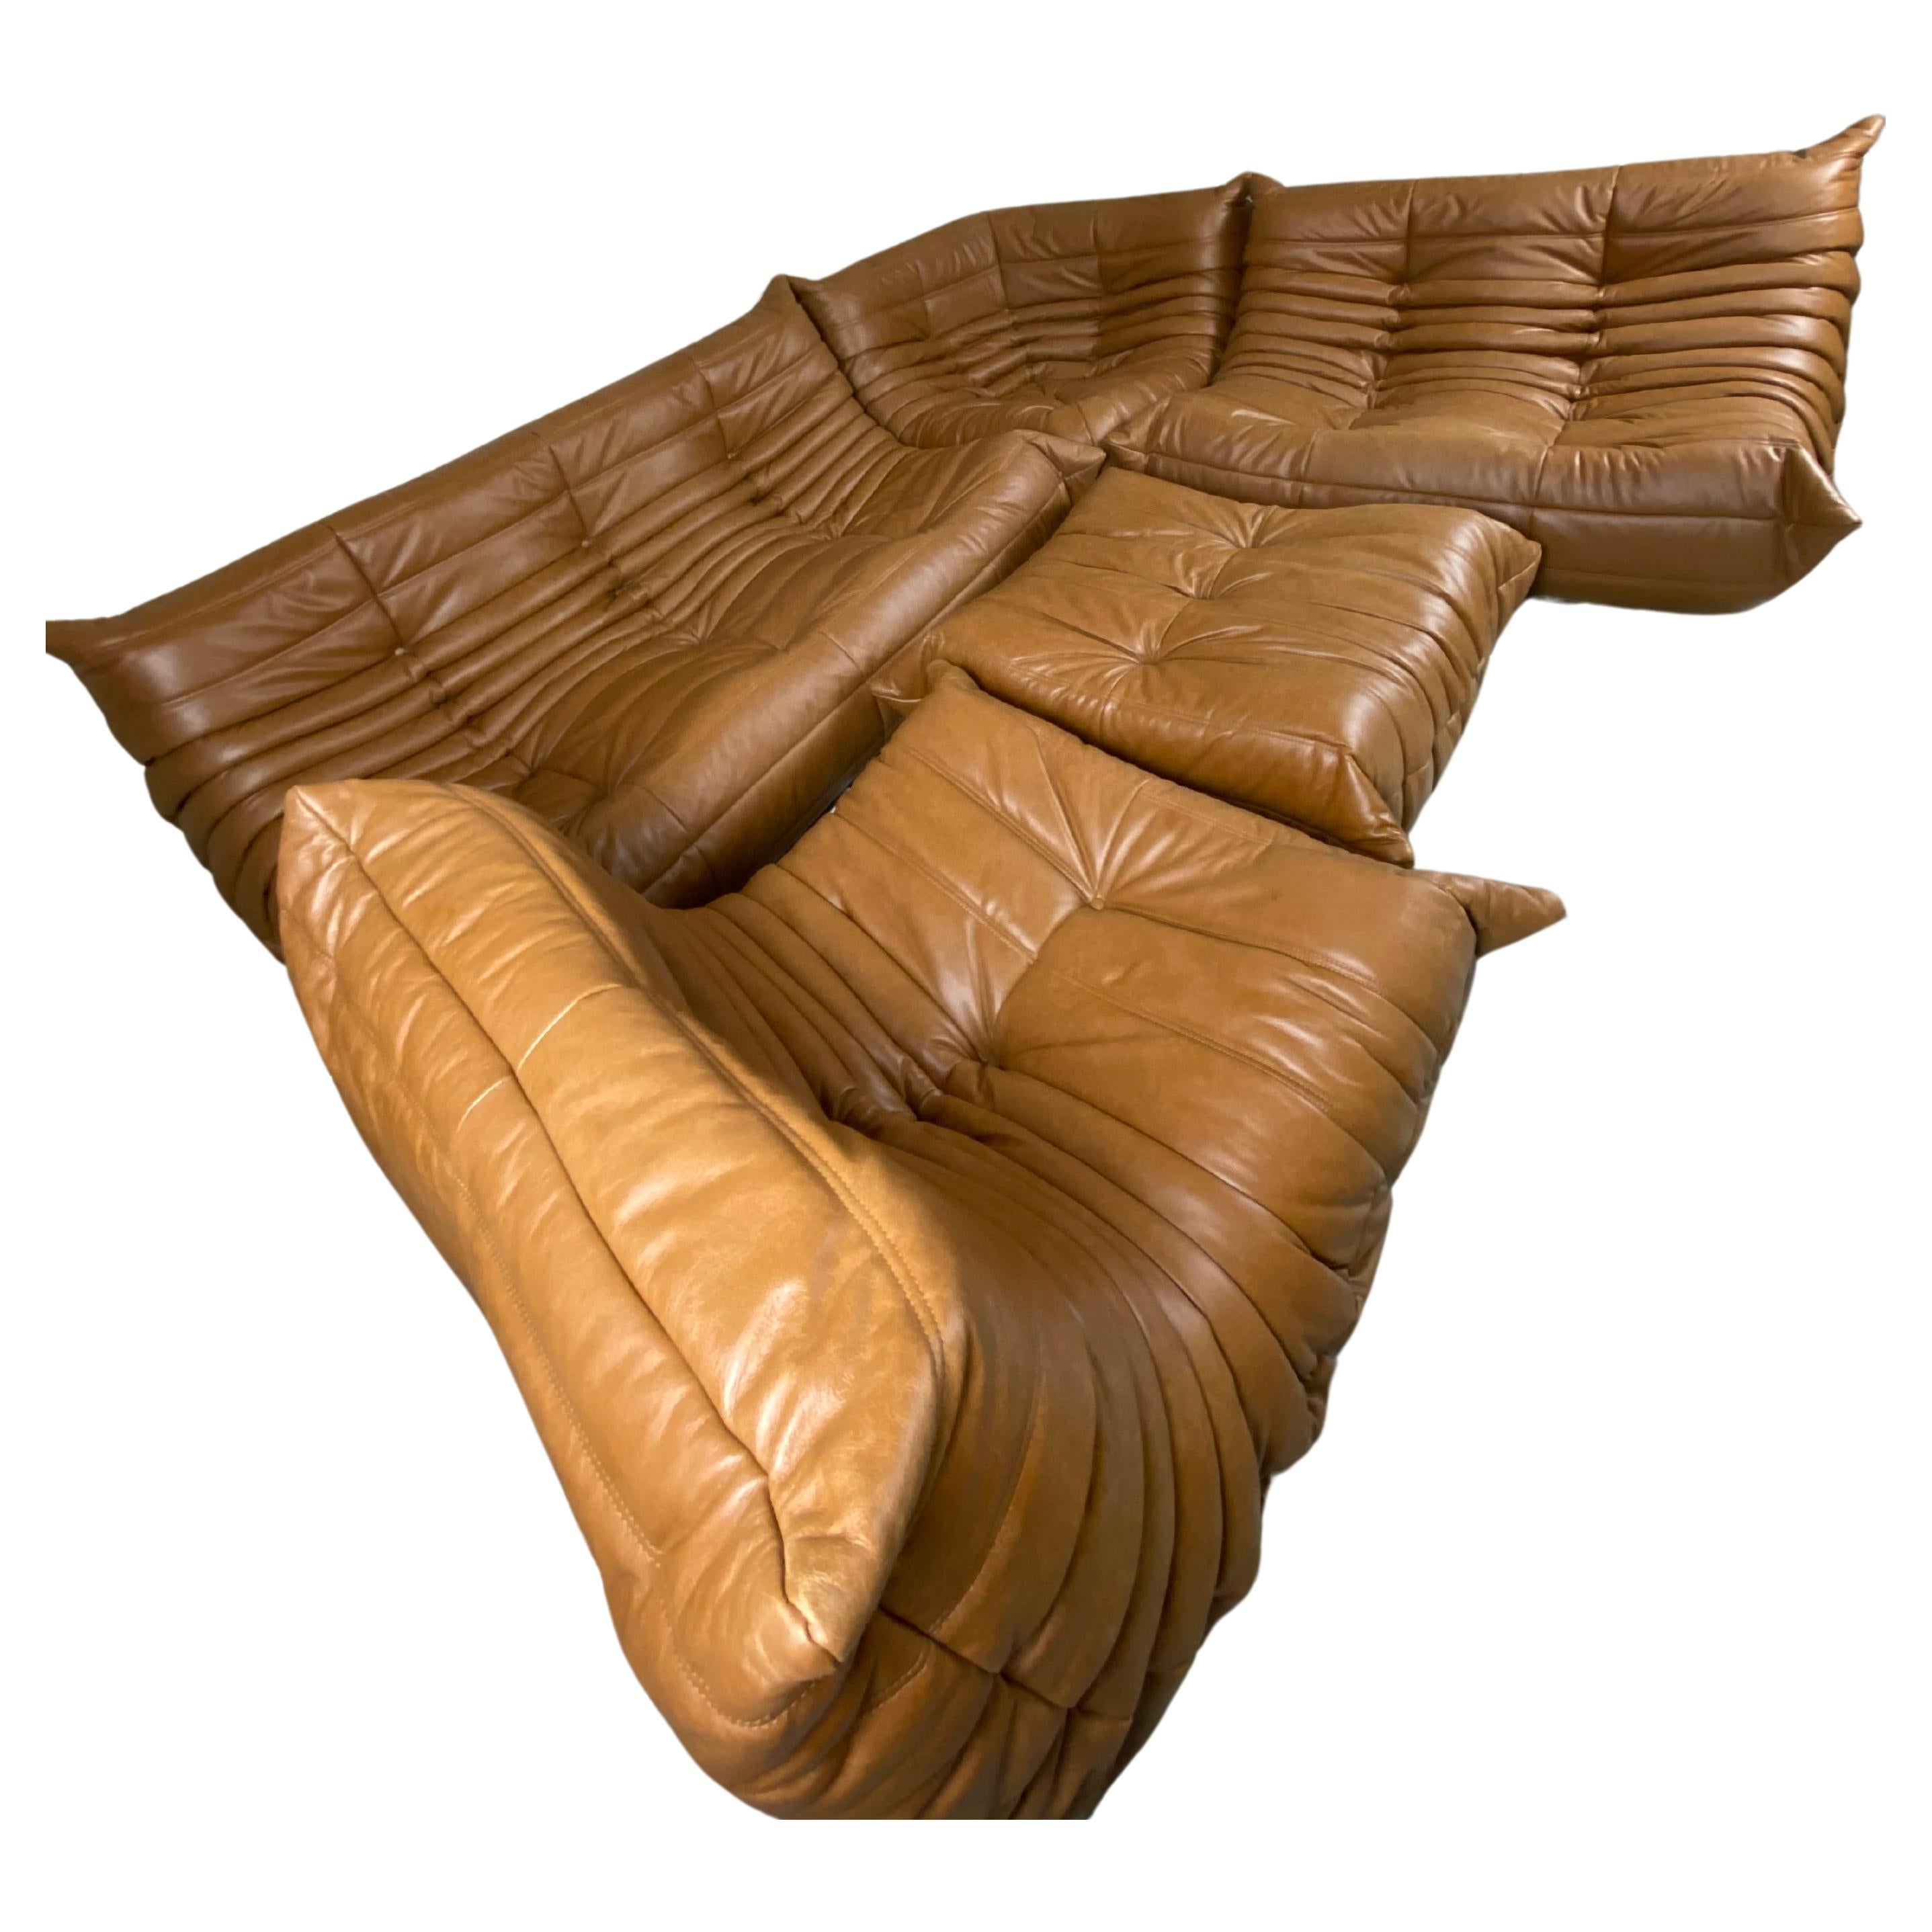 Sofa Togo by Michael Ducaroy for Ligne Roset